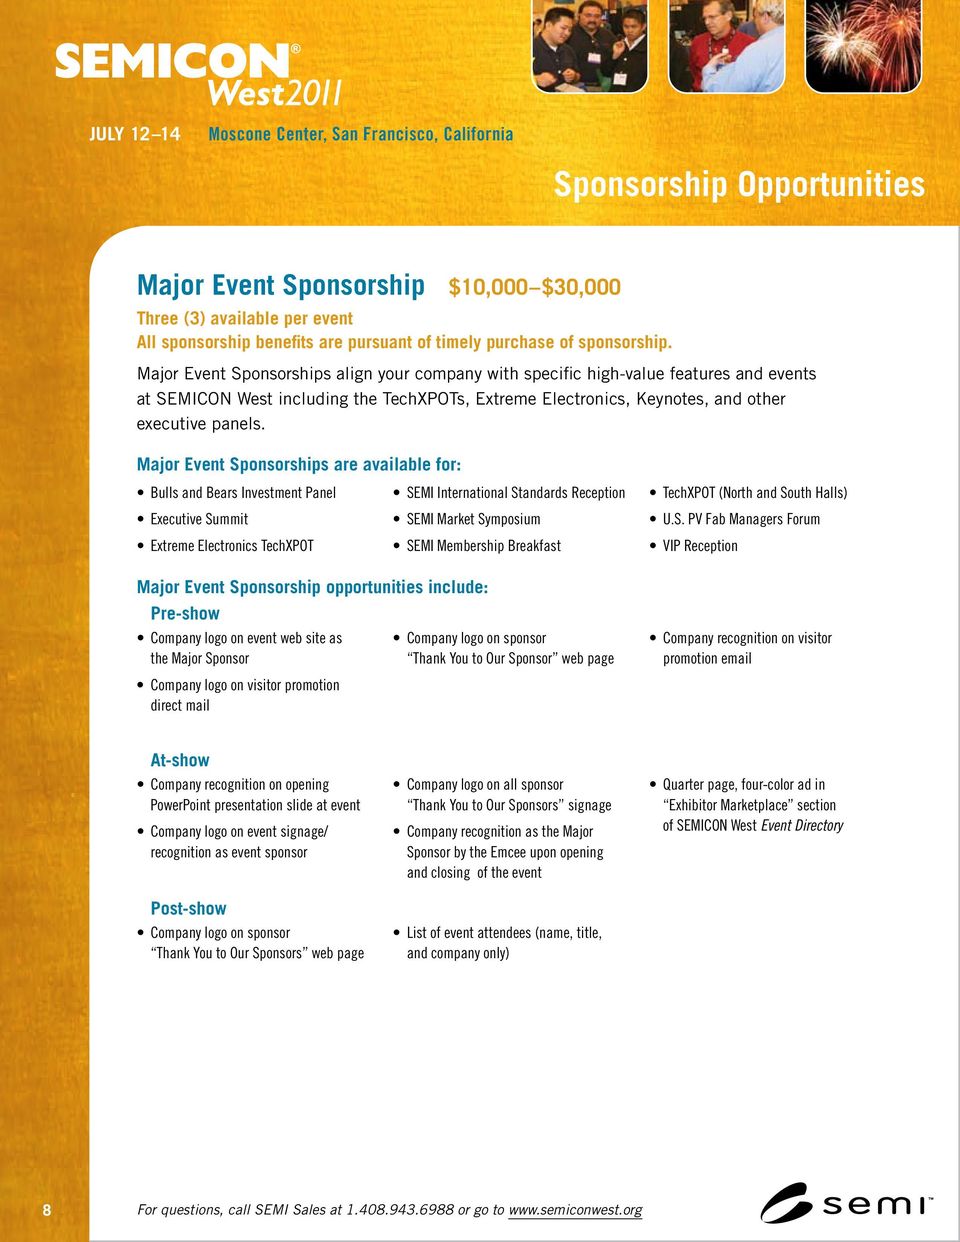 Major Event Sponsorships are available for: Bulls and Bears Investment Panel Executive Summit Extreme Electronics TechXPOT SEMI International Standards Reception SEMI Market Symposium SEMI Membership